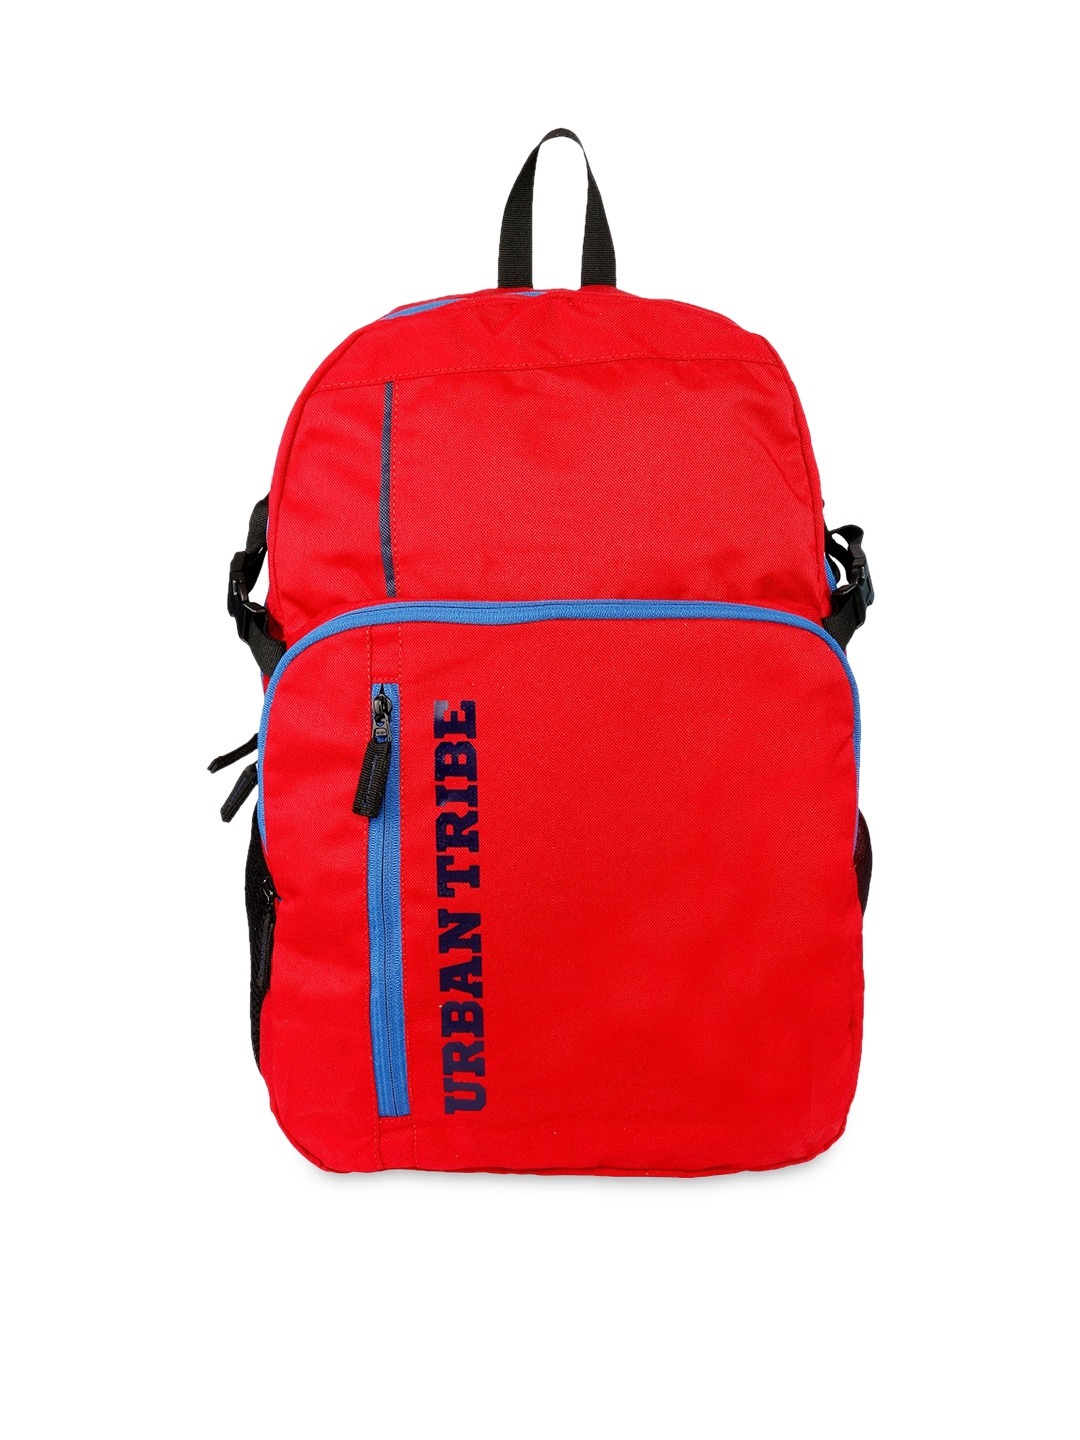 Buy URBAN TRIBE Unisex Red Backpack - Backpacks for Unisex 1412418 | Myntra